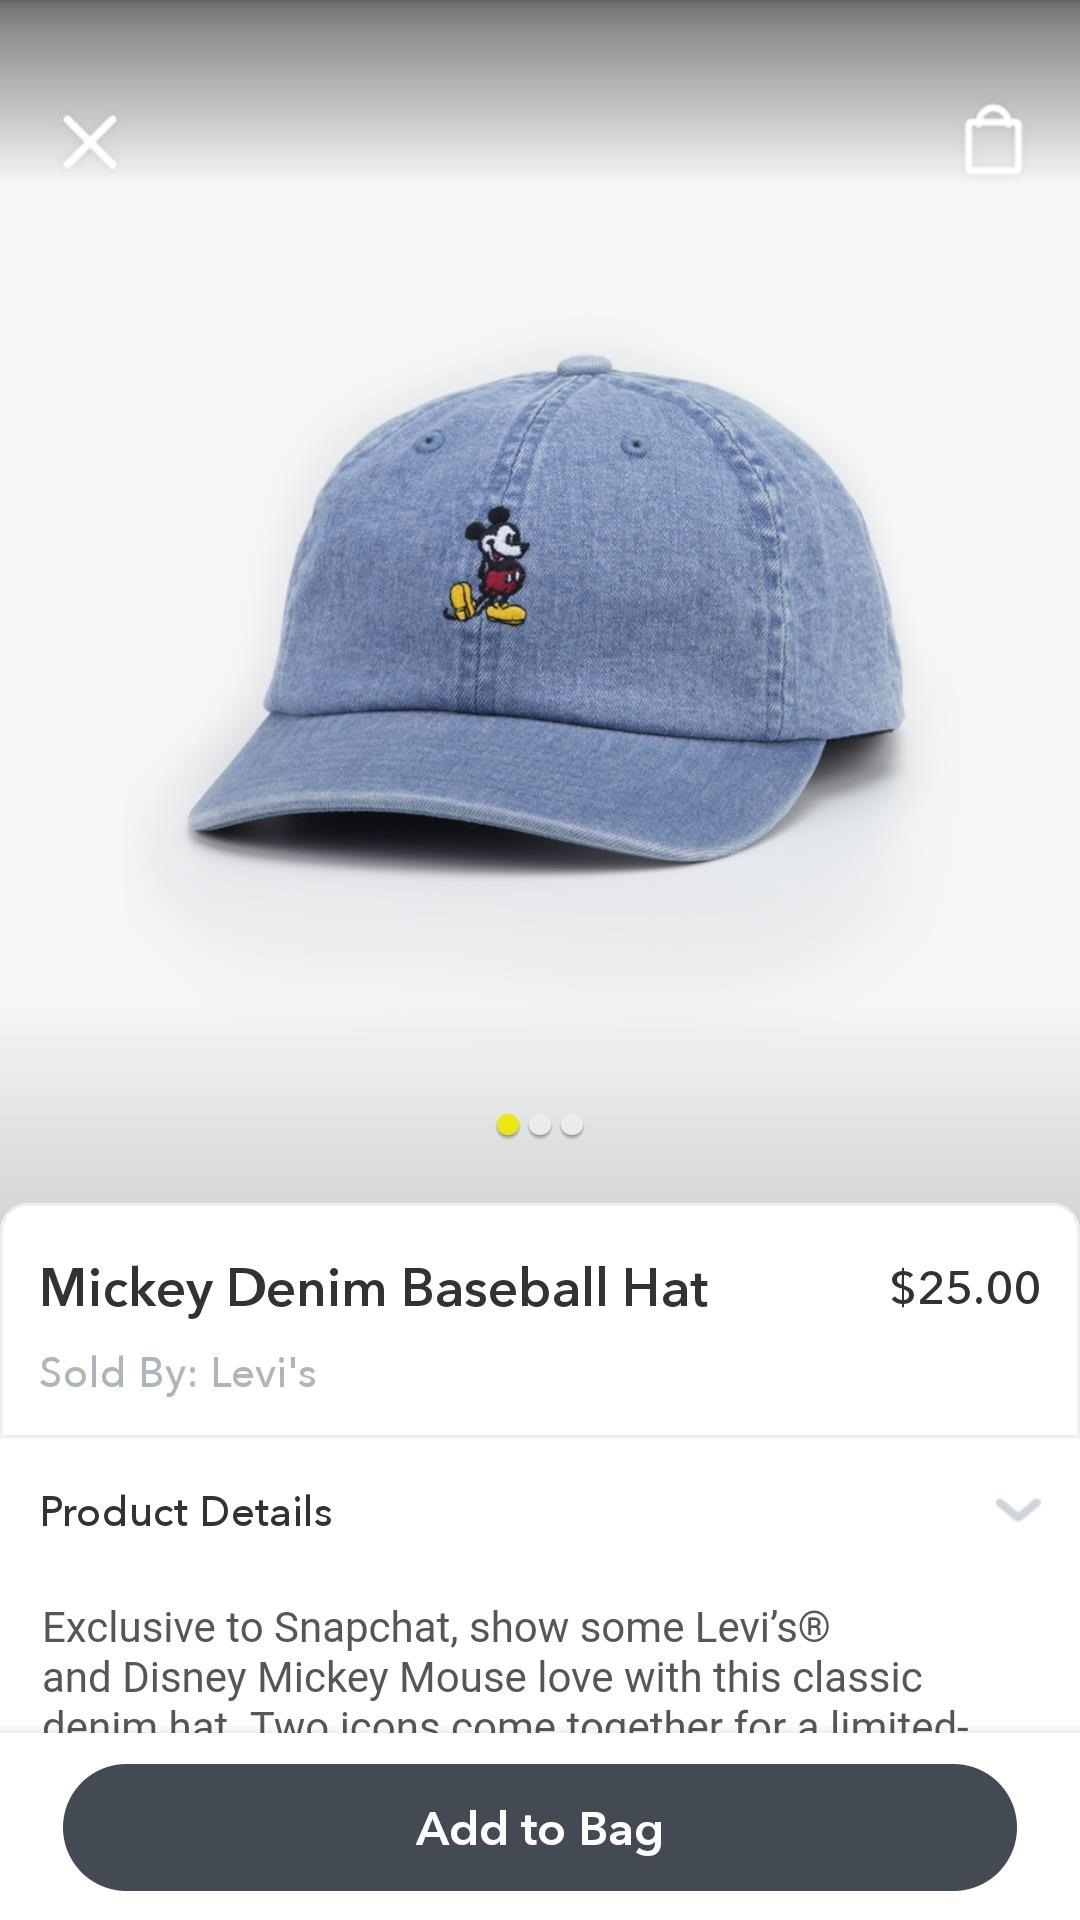 Levi's Now Selling Exclusive Disney Denim Through Shoppable AR Lens on Snapchat